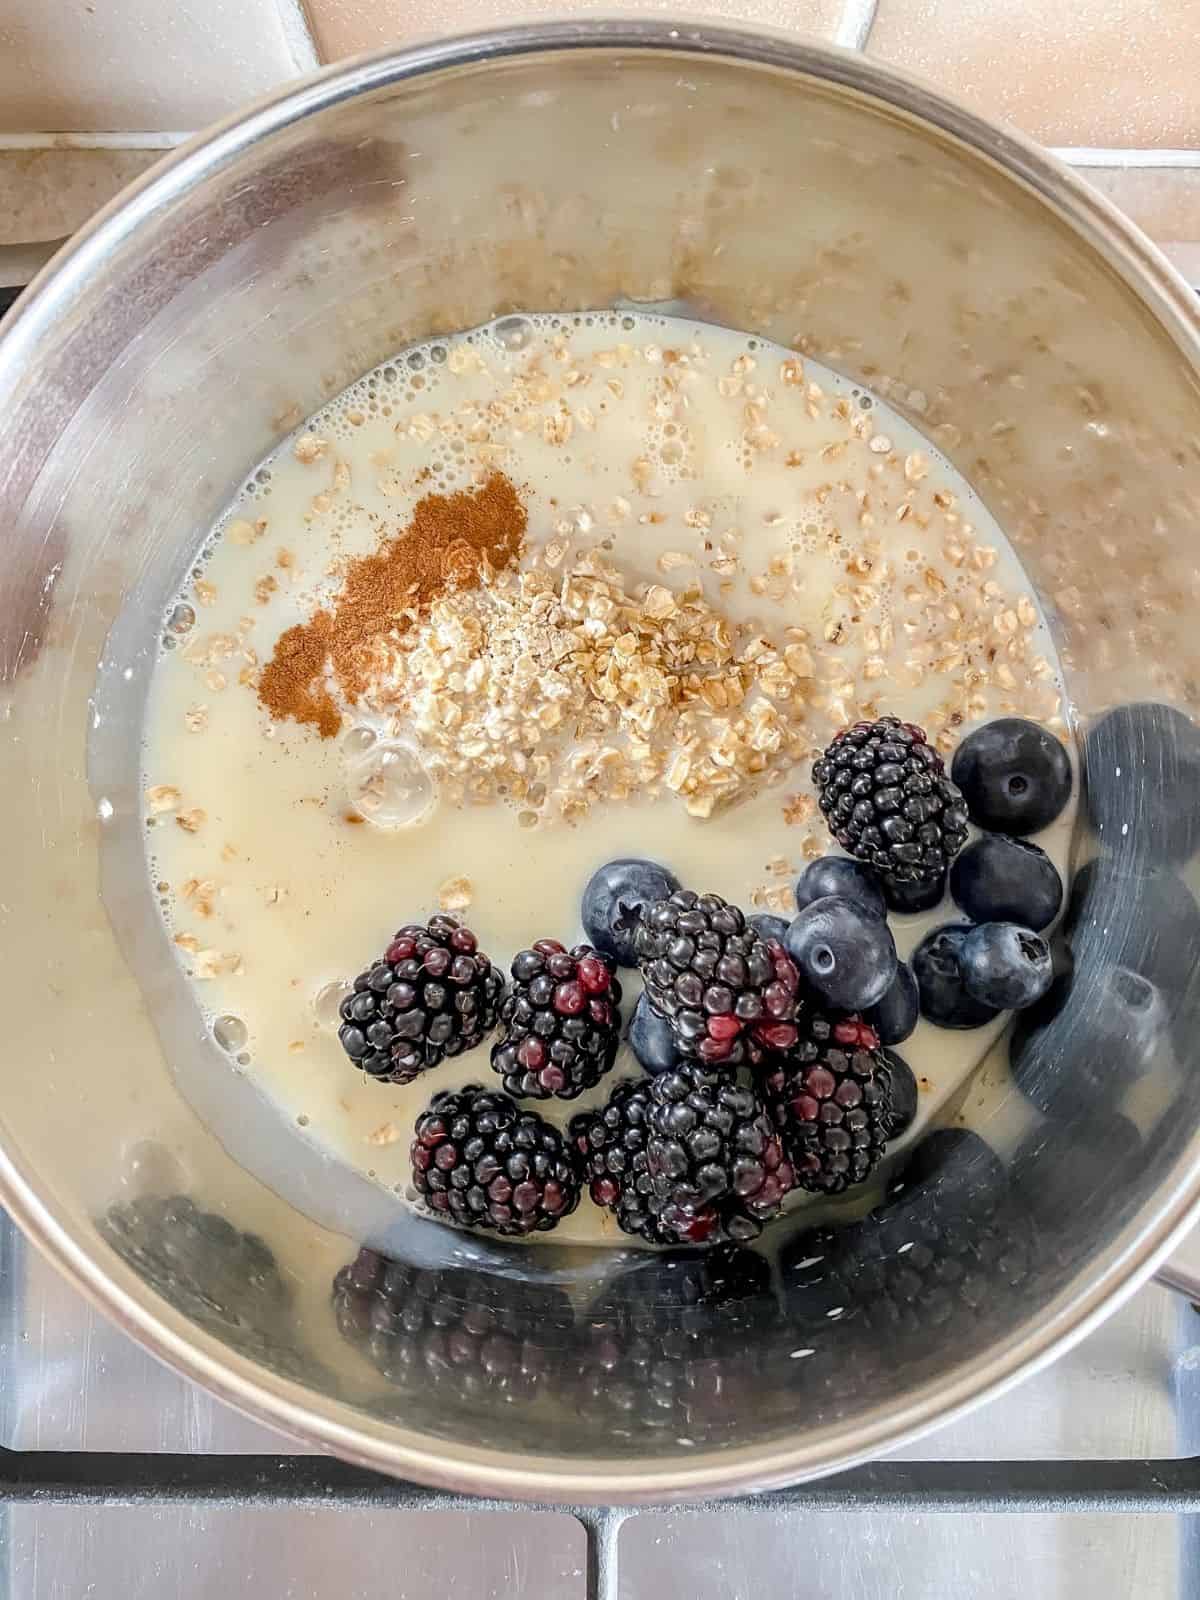 berries, oats and cinnamon in a saucepan.